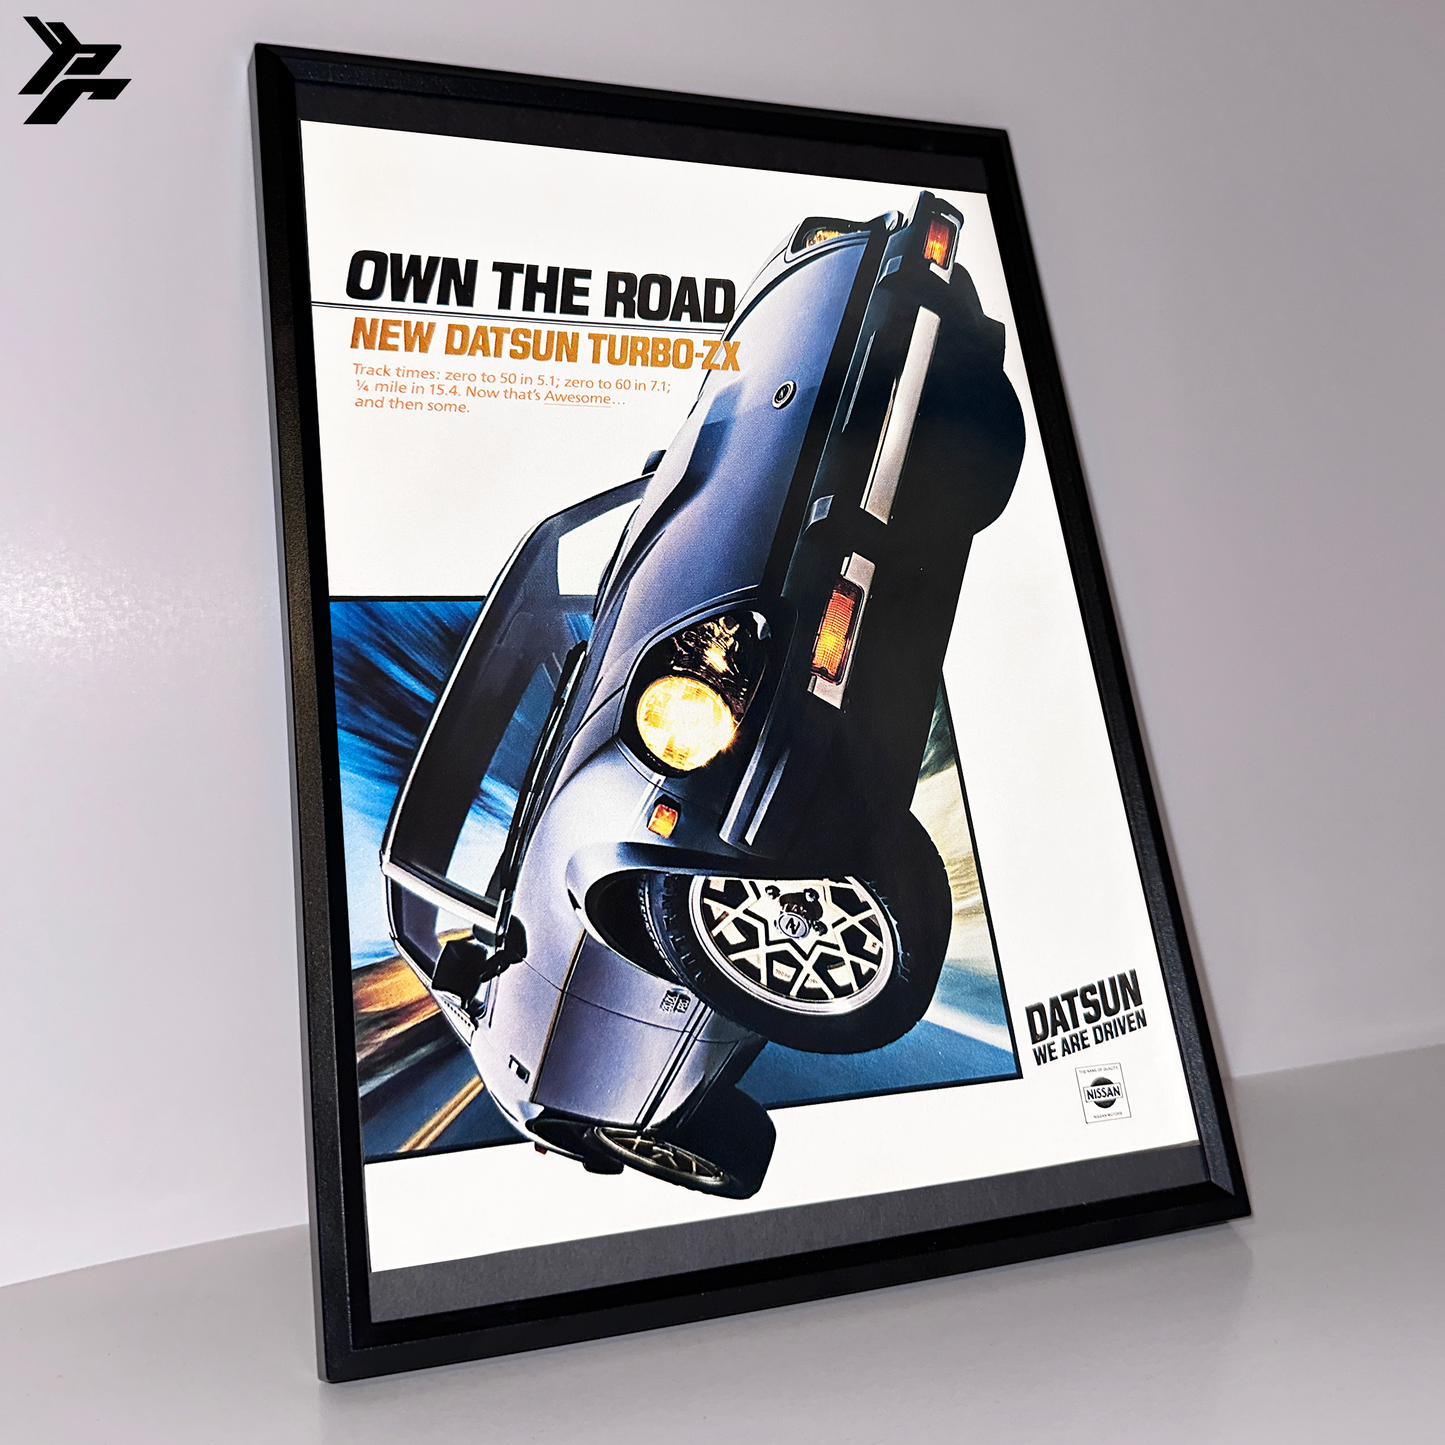 Datsun Turbo zx framed ad